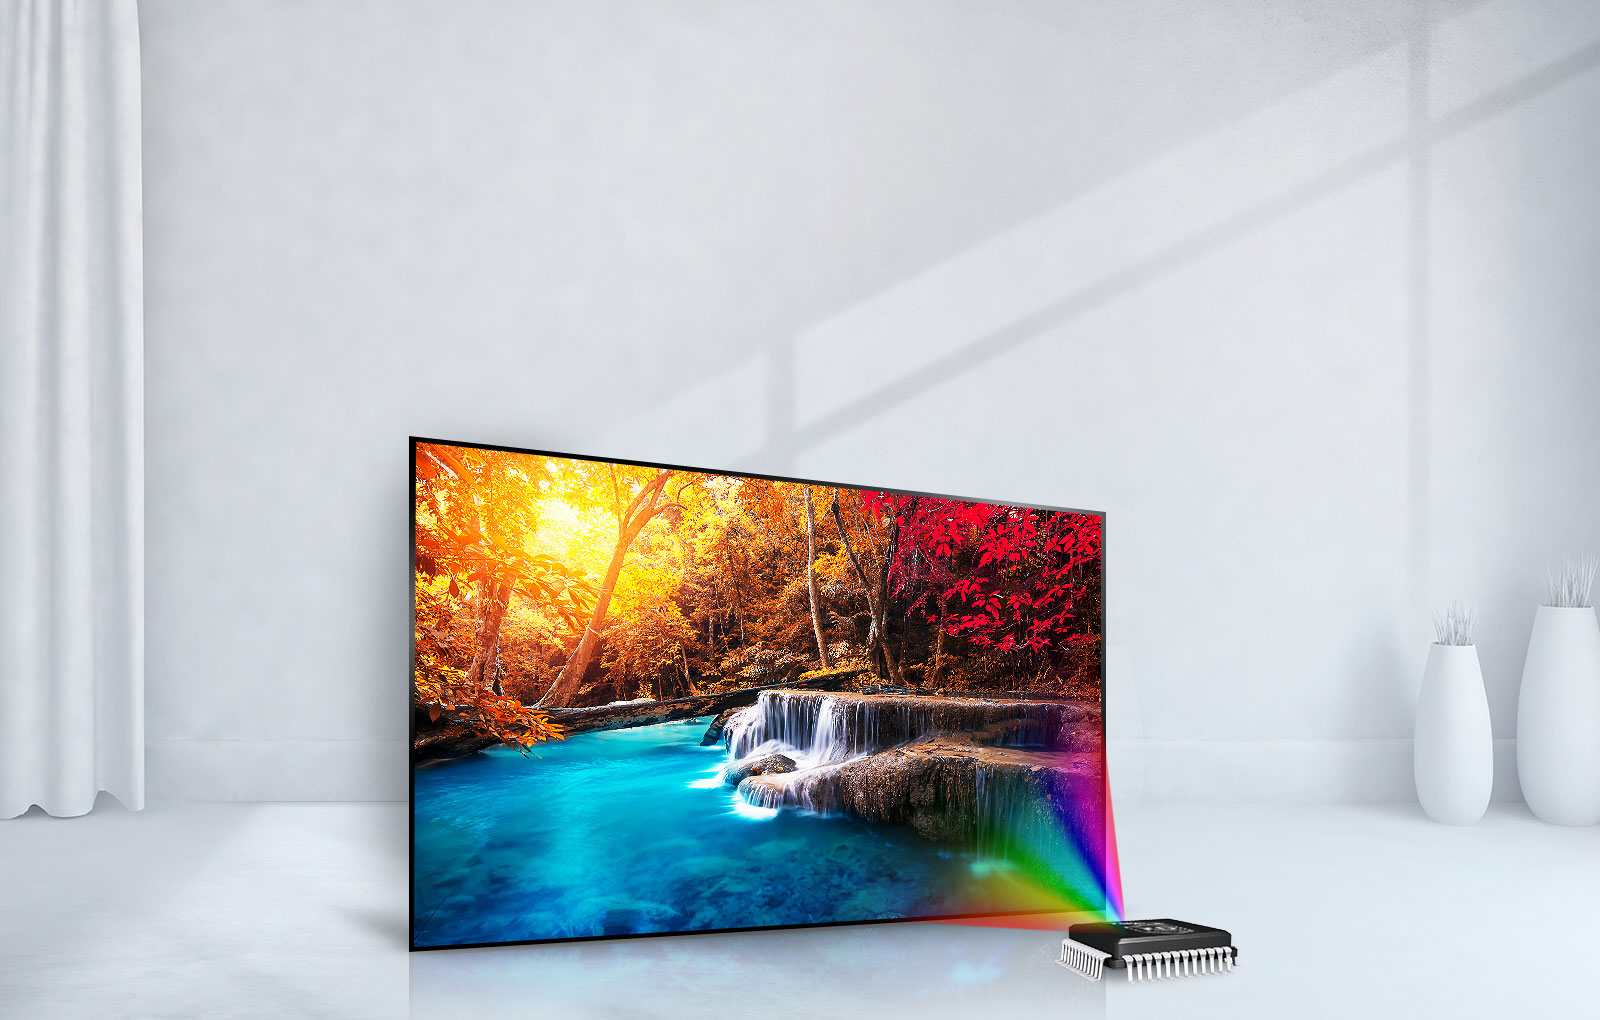 تلویزیون اسمارت ال جی LED TV Smart LG55LJ62000GI - سایز 55 اینچ